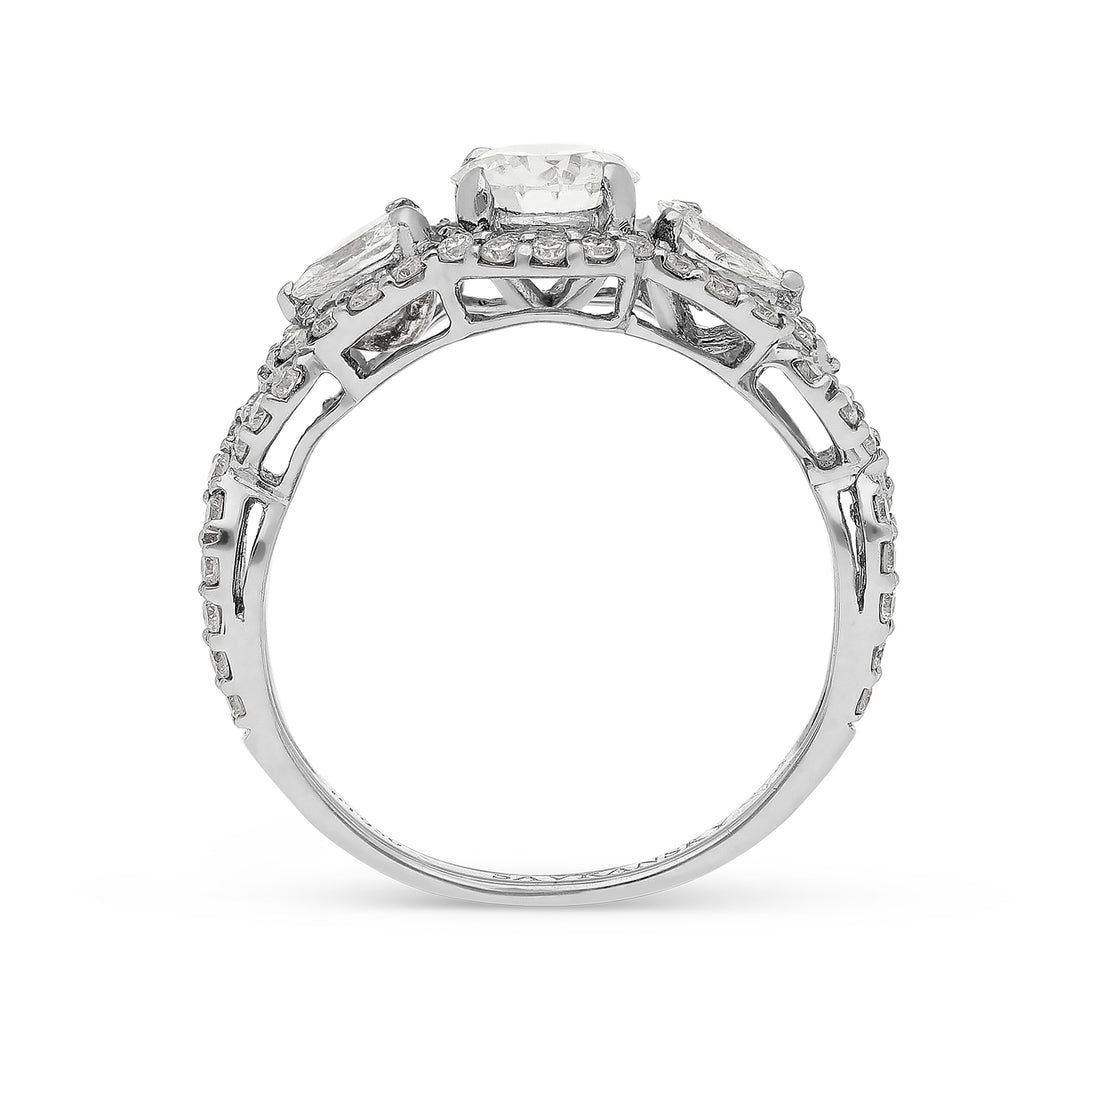 Art Deco Three Stone Diamond Engagement Ring in White Platinum - 2 Carat